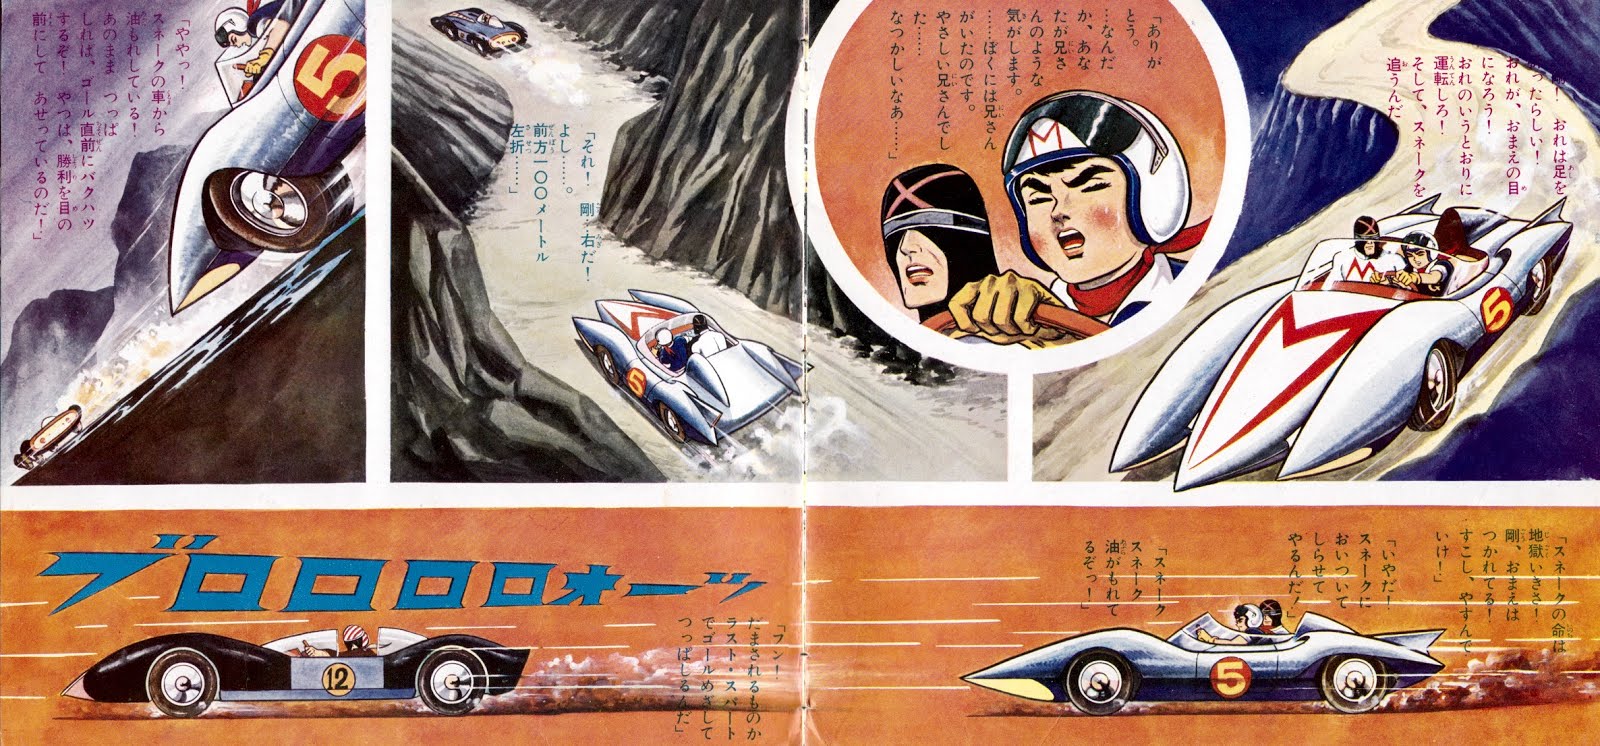 Gogogo Mach 5, speed racer, マッハGoGoGo, TAKASHI SAIJYO, in David C.'s  TAKASHI SAIJYO Comic Art Gallery Room